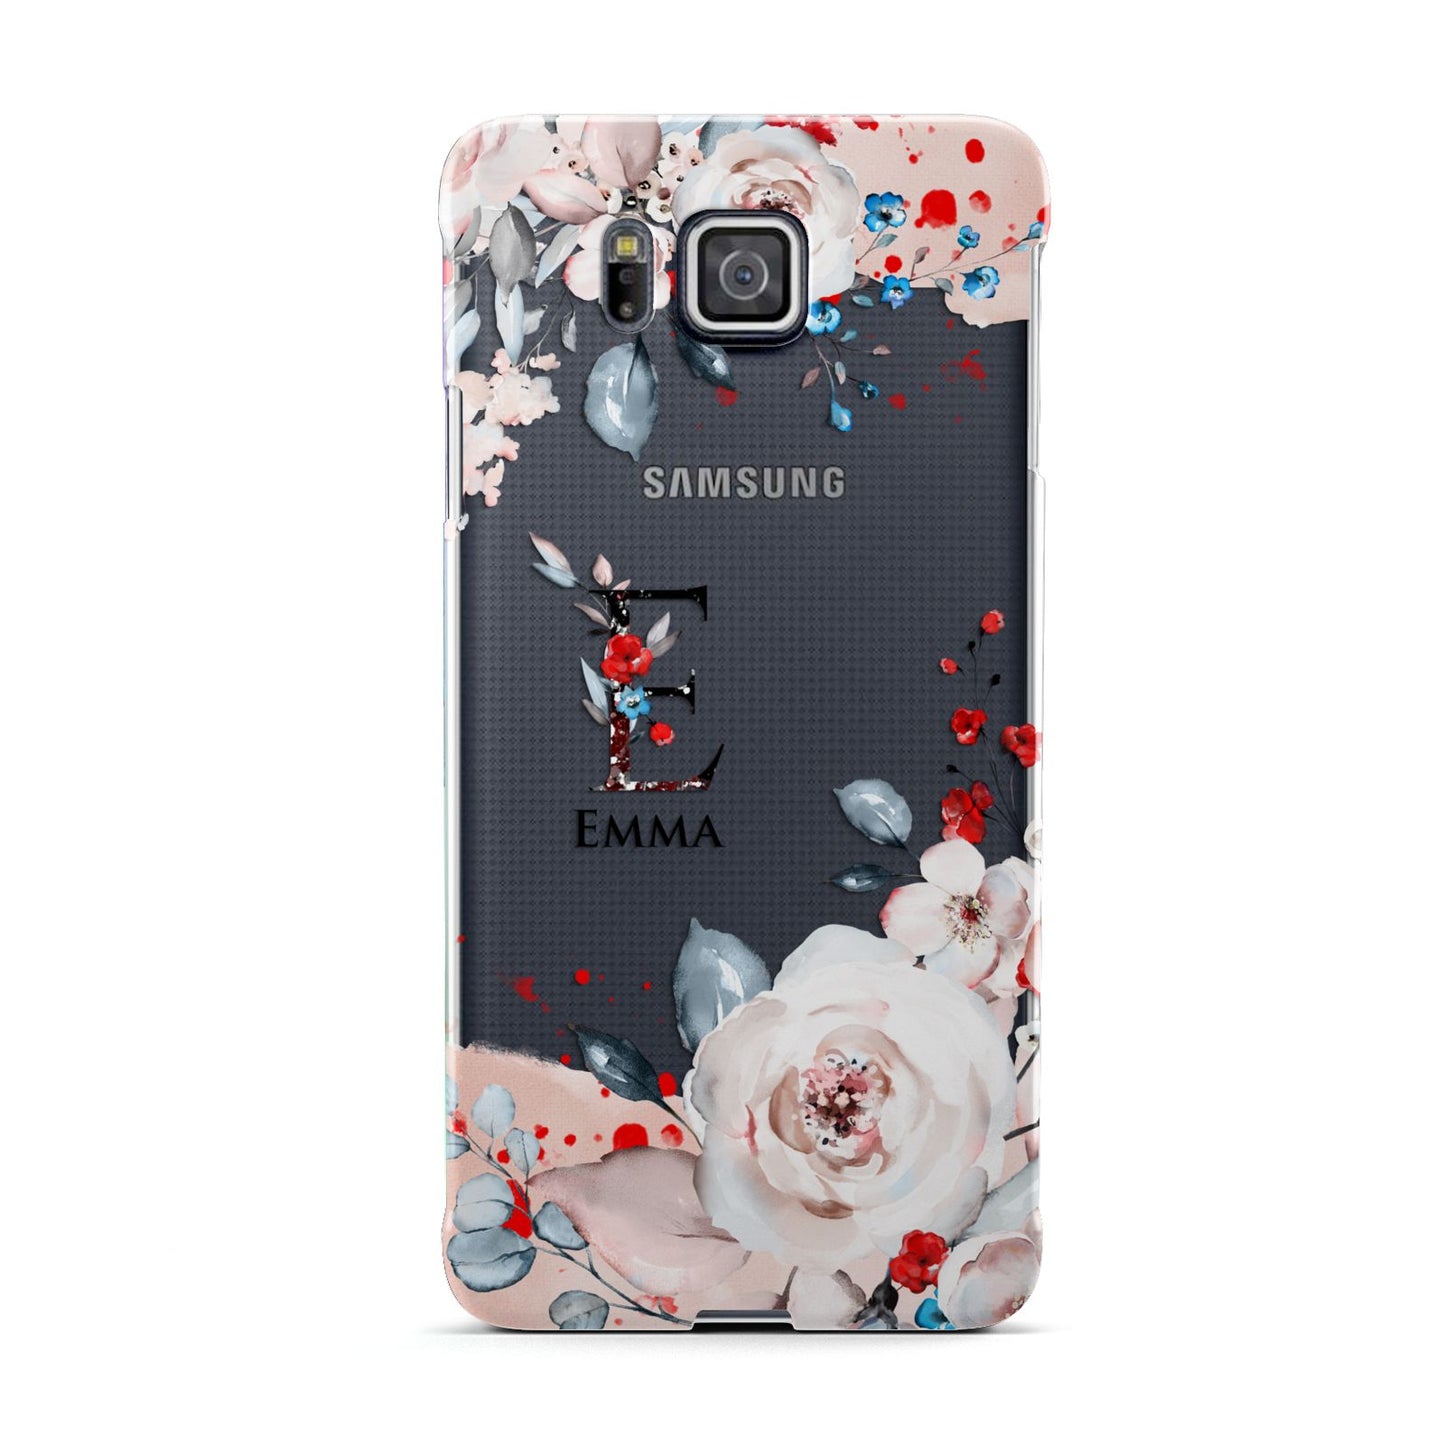 Monogrammed Roses Floral Wreath Samsung Galaxy Alpha Case